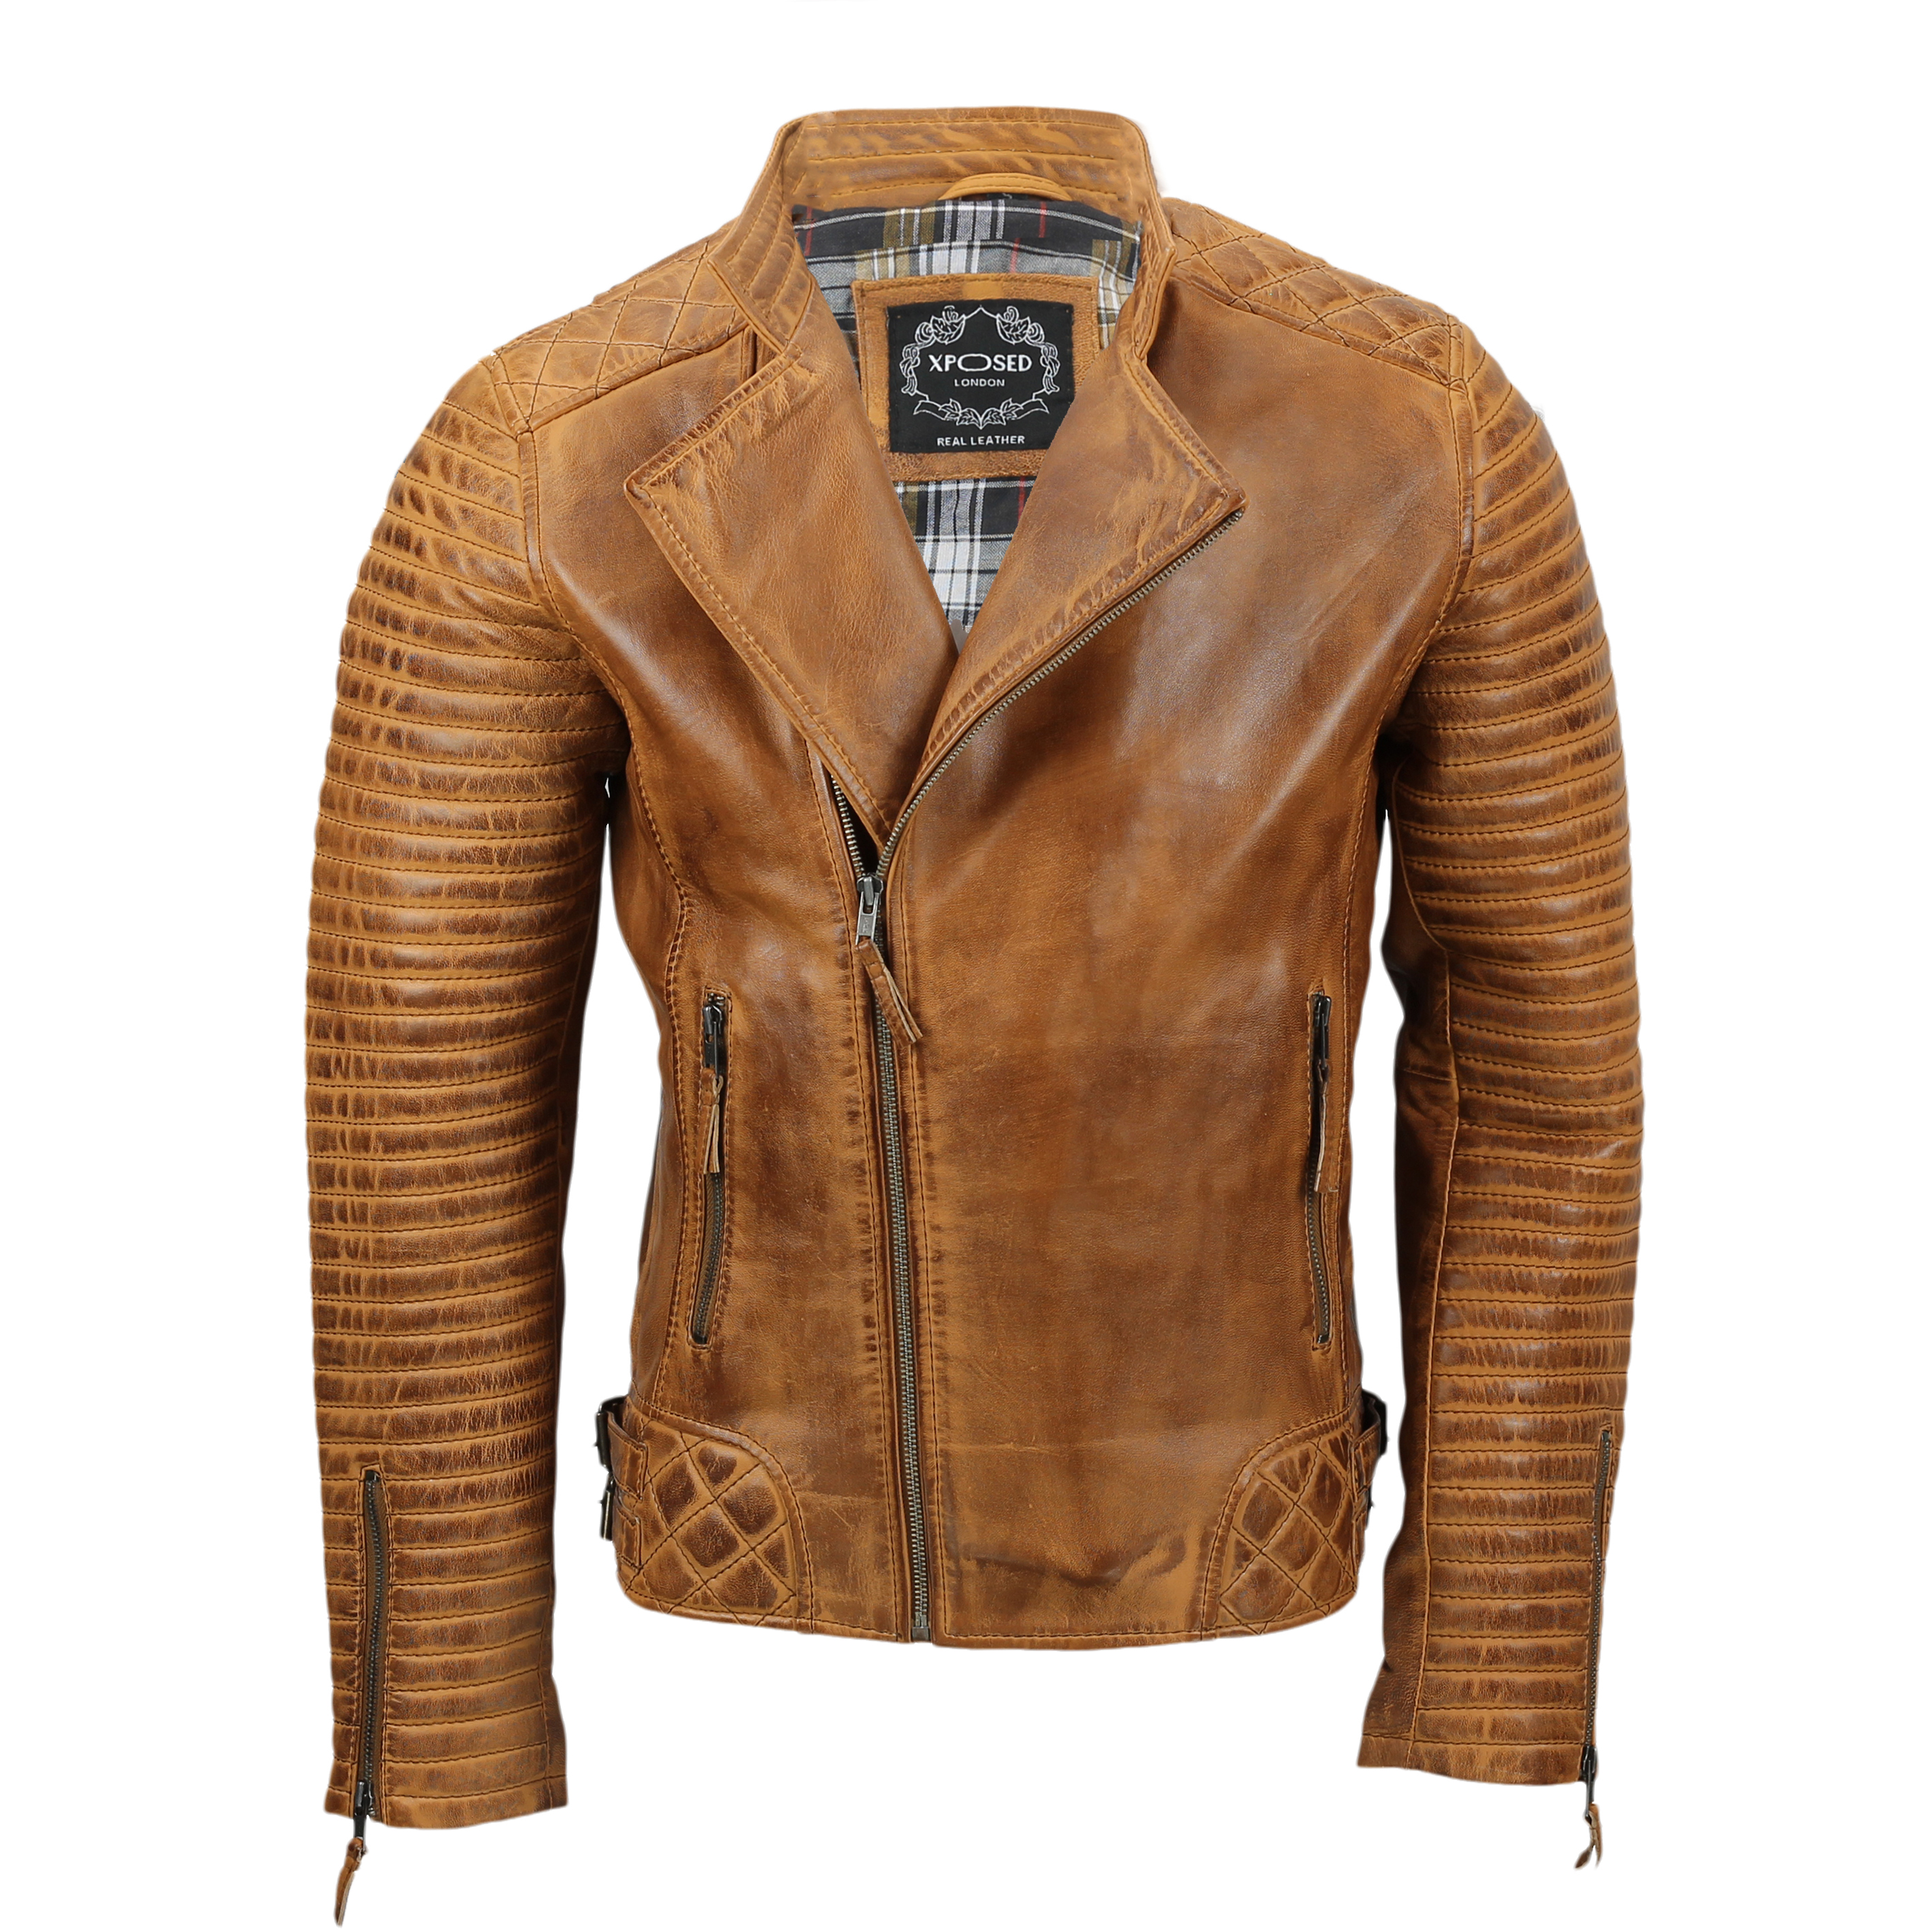 Mens Real Leather Biker Jacket Retro New Moto Cafe Style in Vintage Tan, Black | eBay